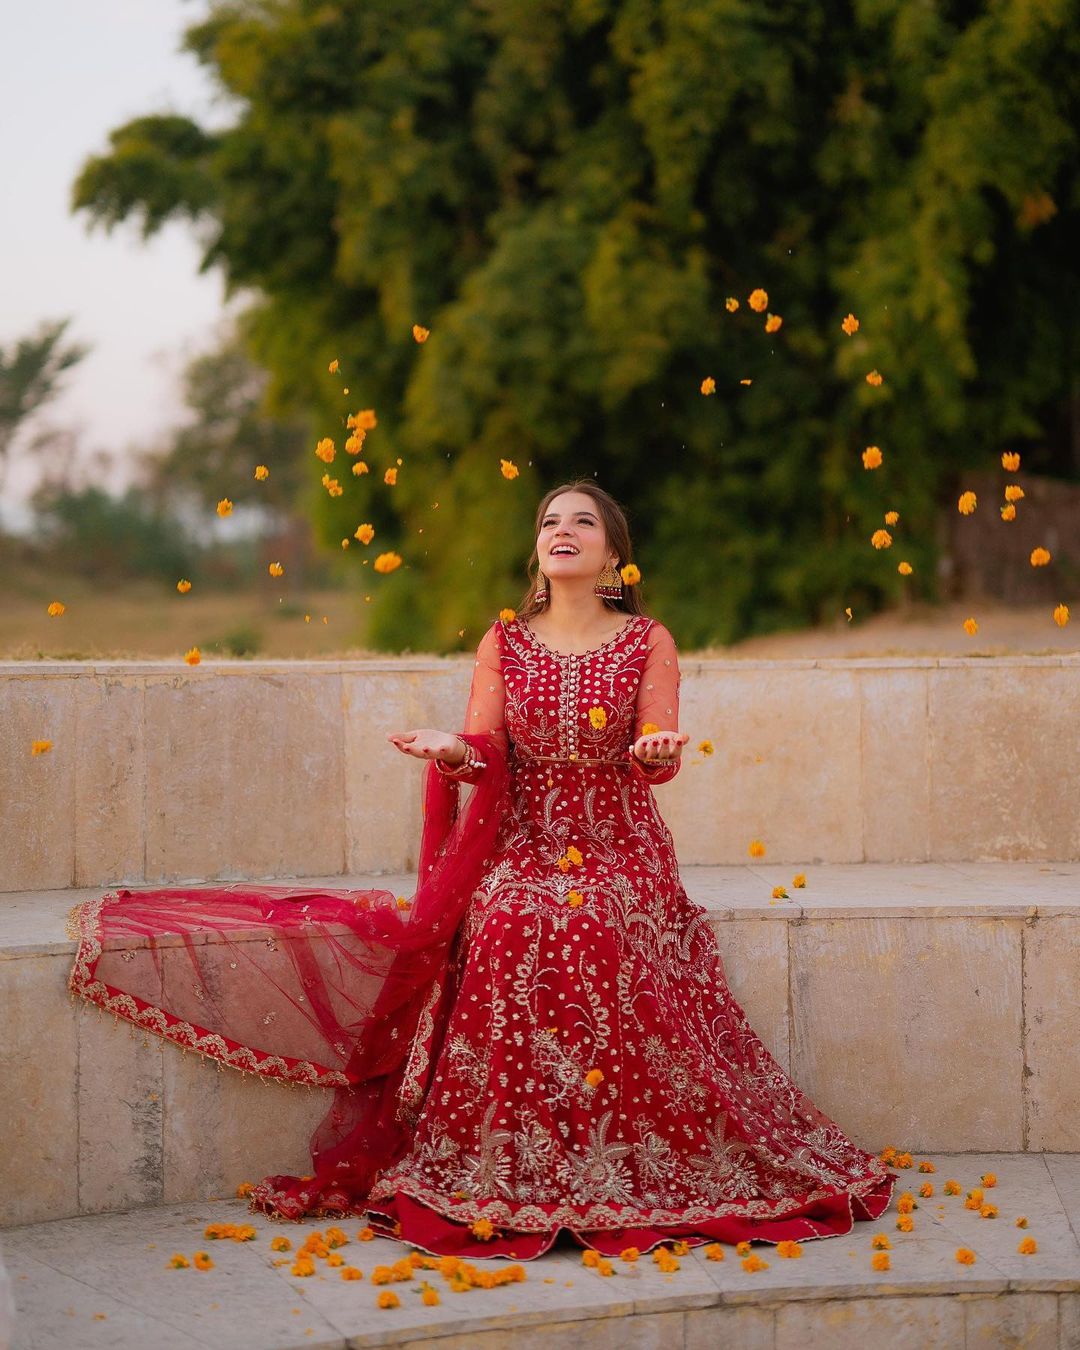 Dananeer Mobeen Mesmerizes Fans in Heavily Embellished Red Pishwas - Lens